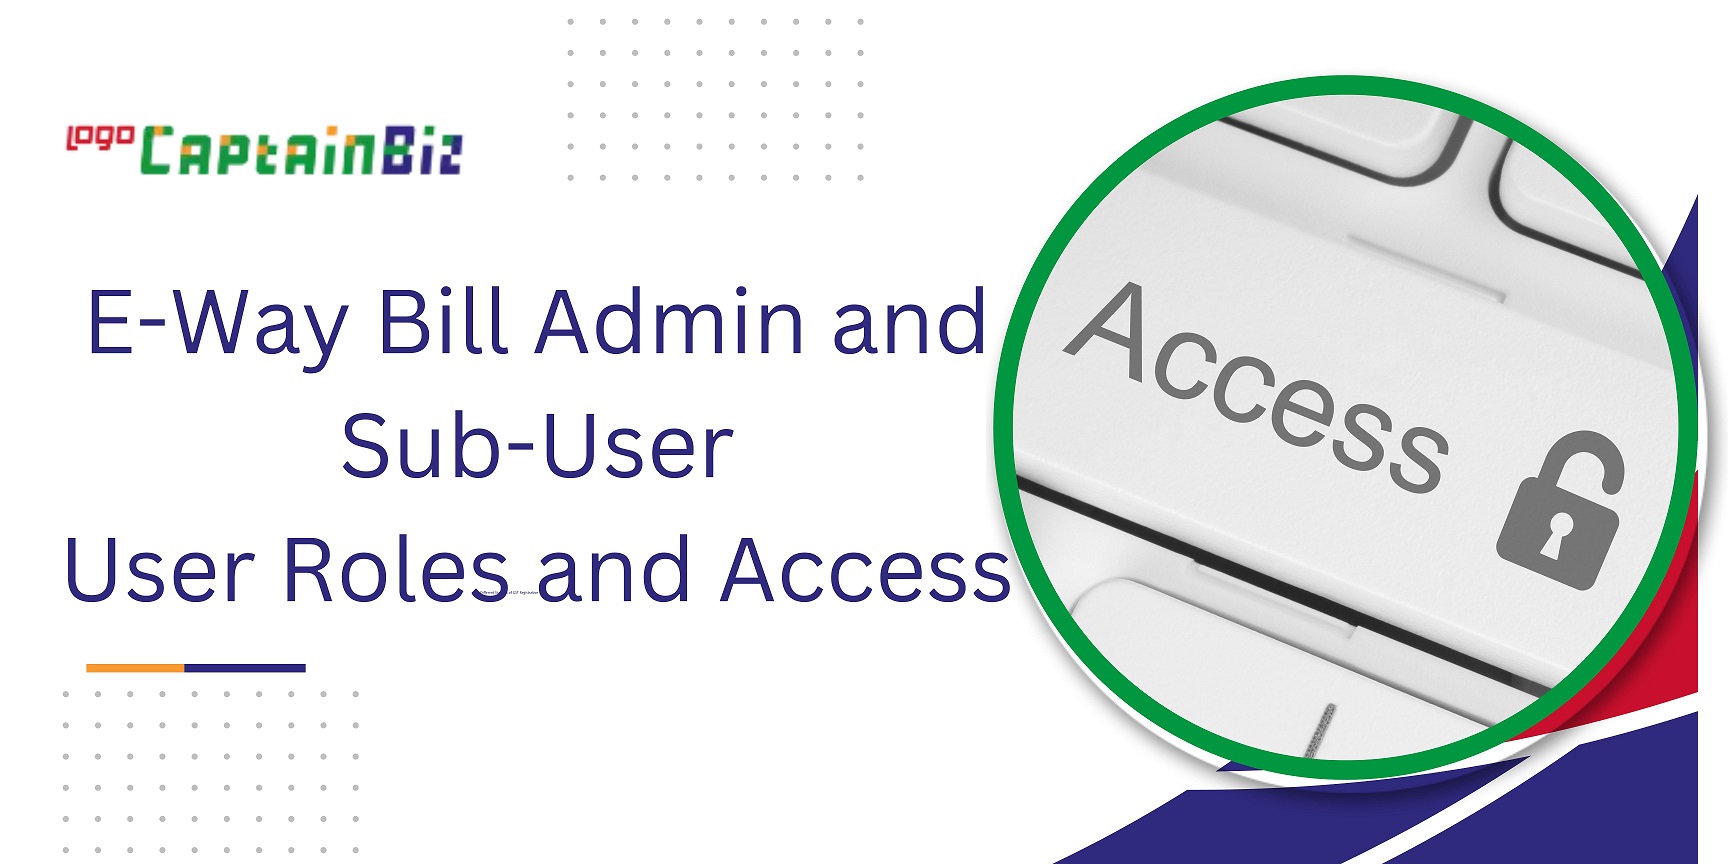 CaptainBiz: e-Way Bill Admin and Sub-User User Roles and Access